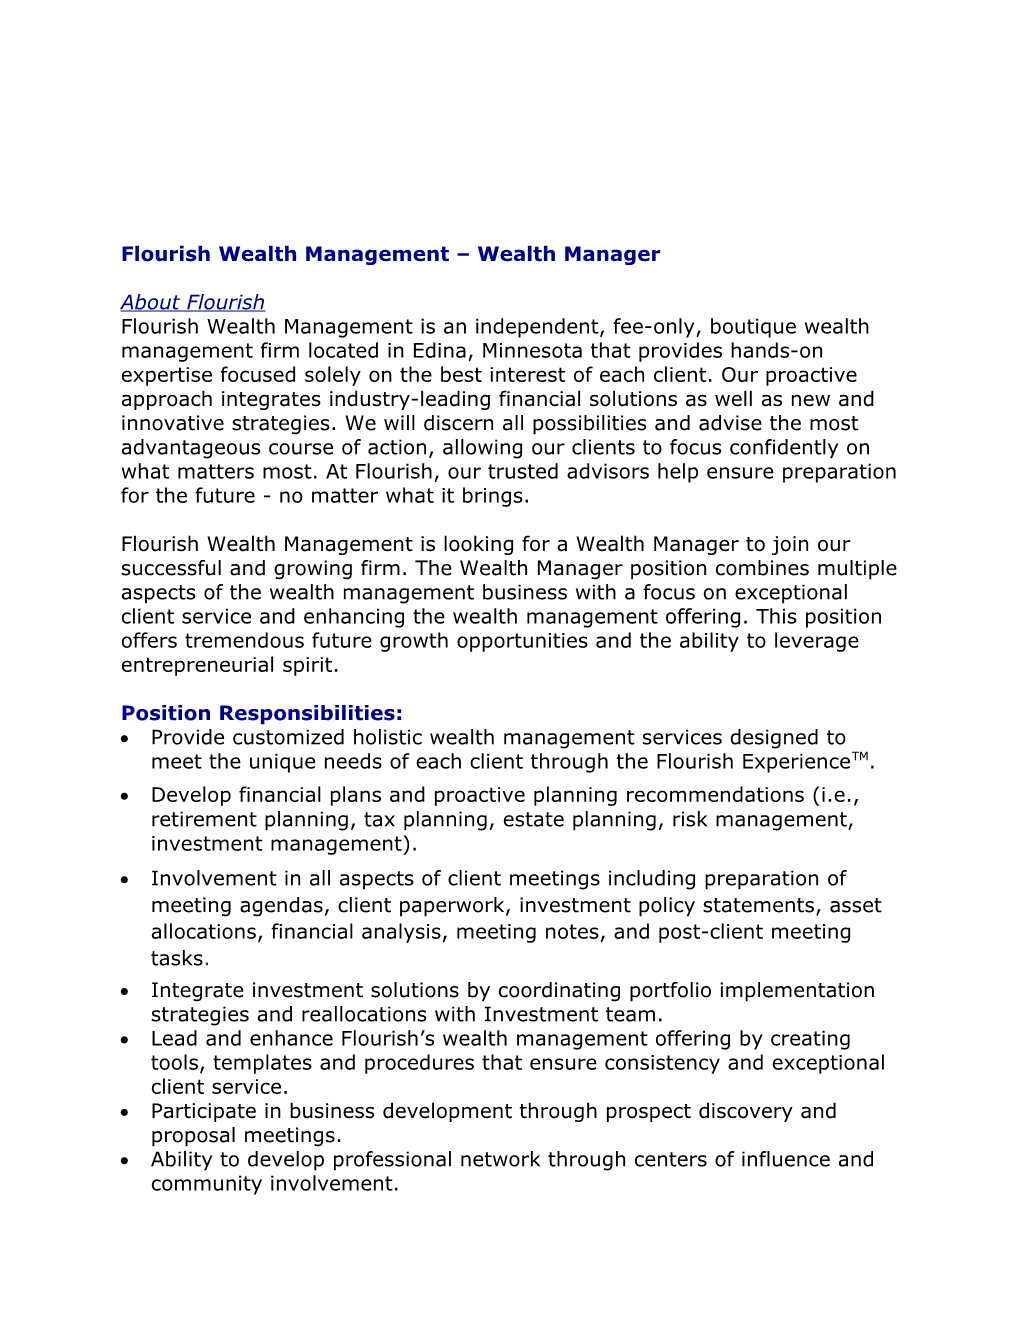 Flourish Wealth Management Wealth Manager